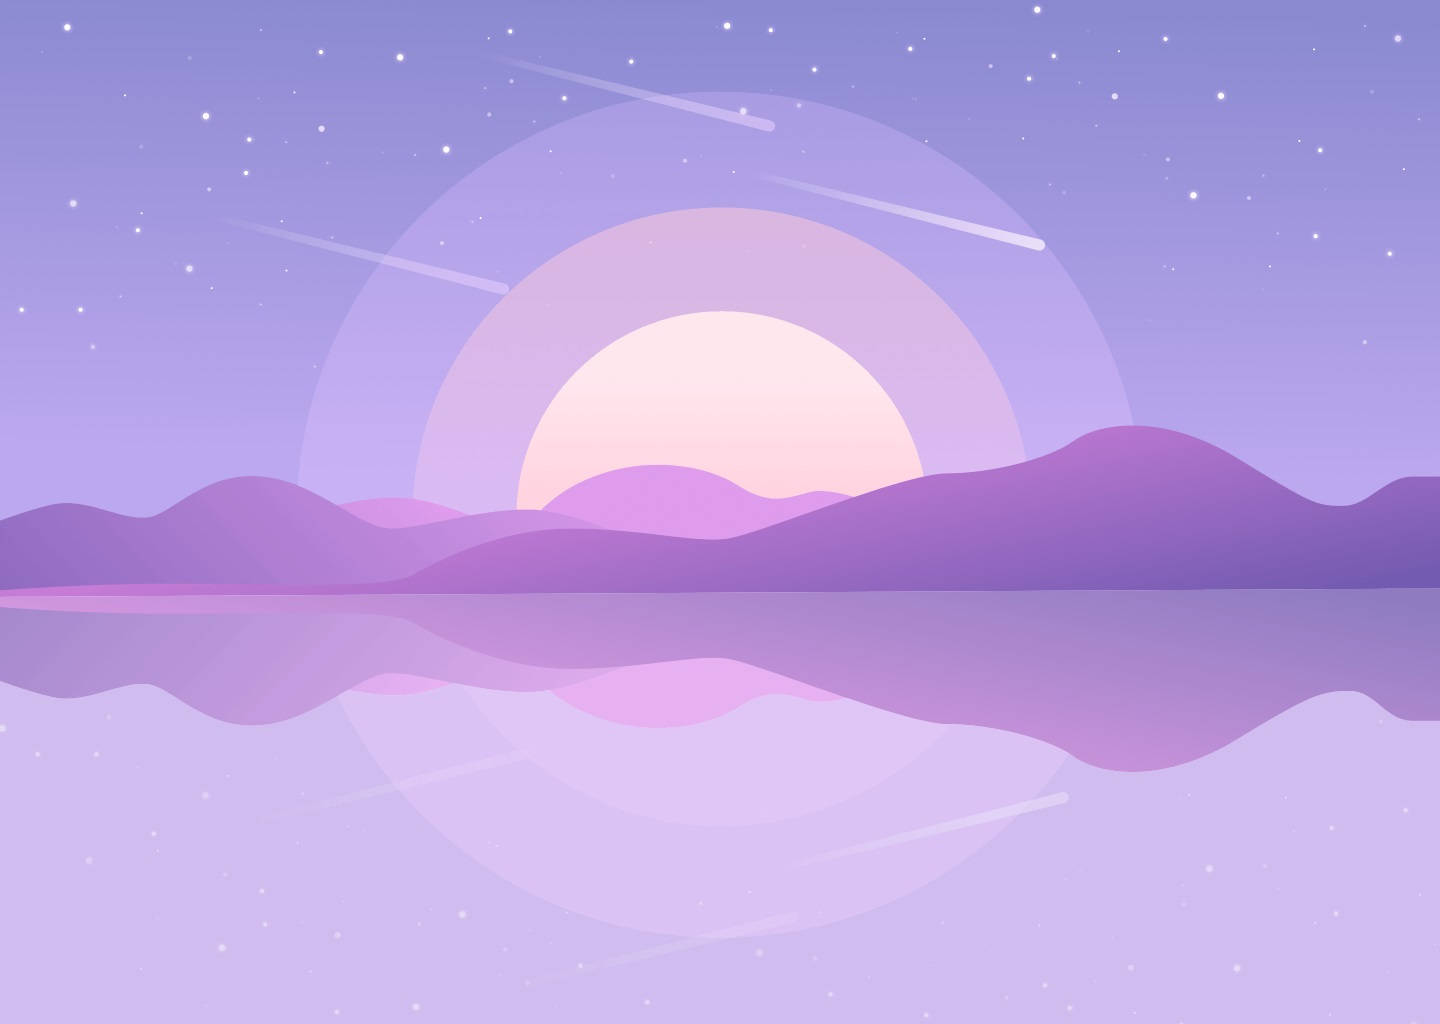 Moon With Shooting Stars On Light Purple Sky Background